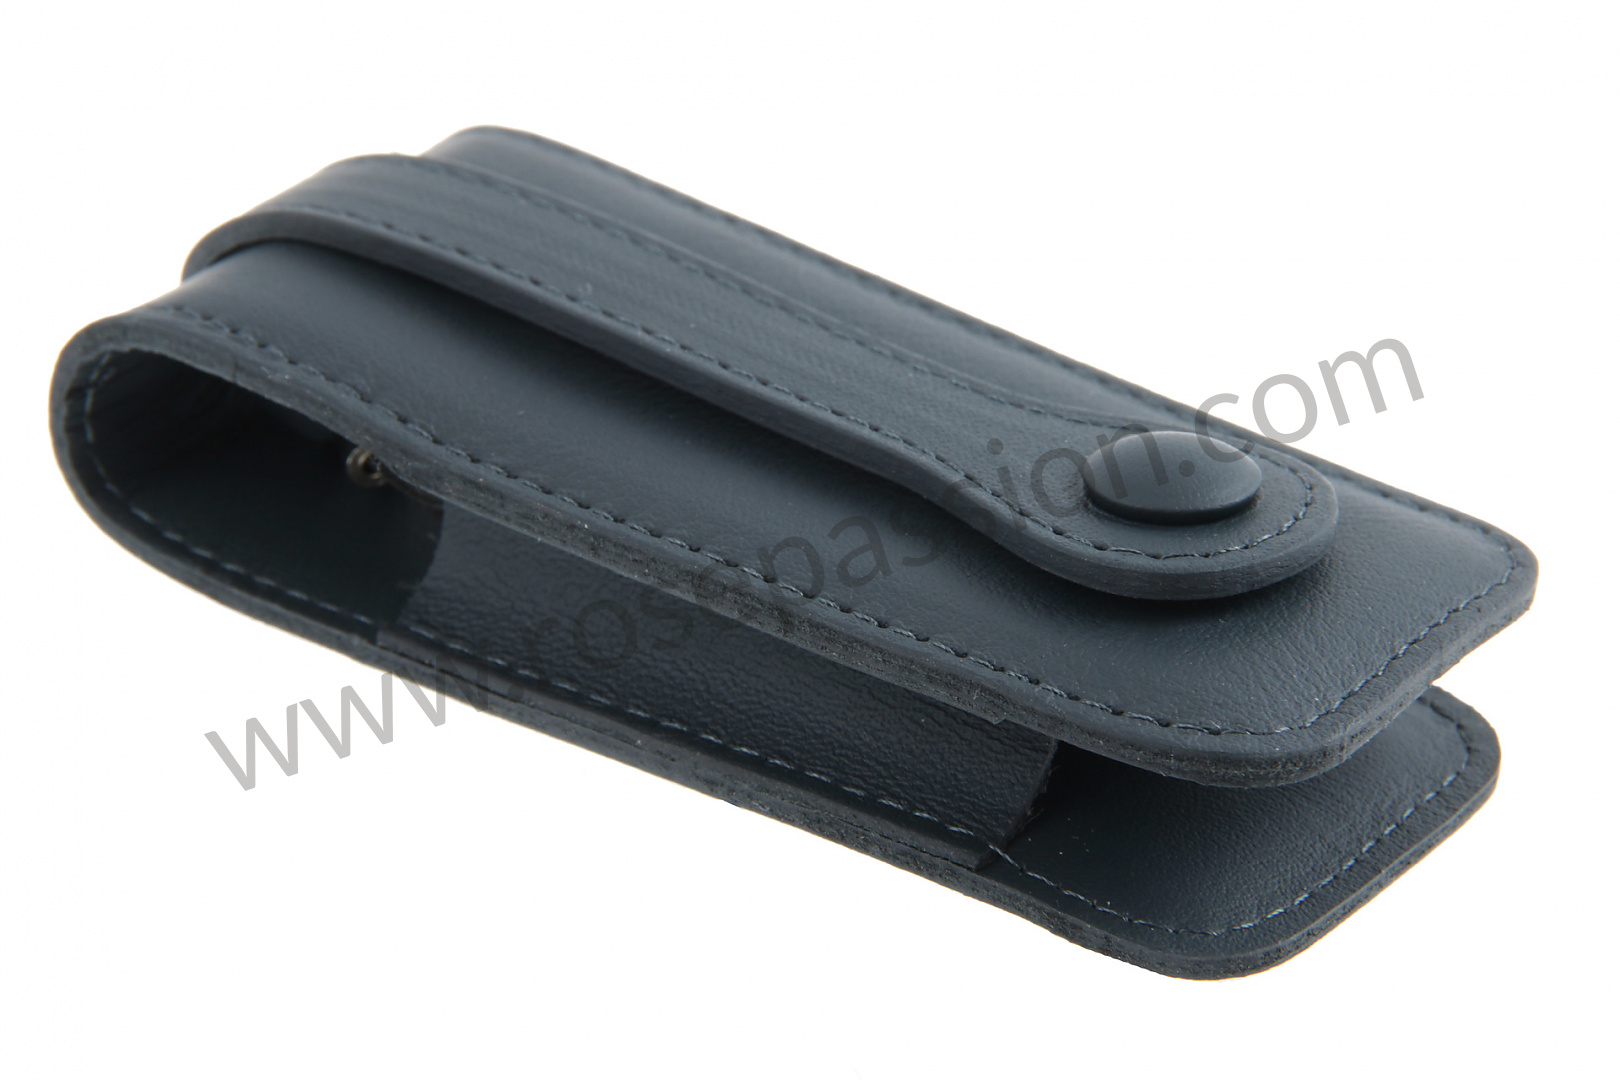 P251933 - 97004400112 - Case key leather graphite blue